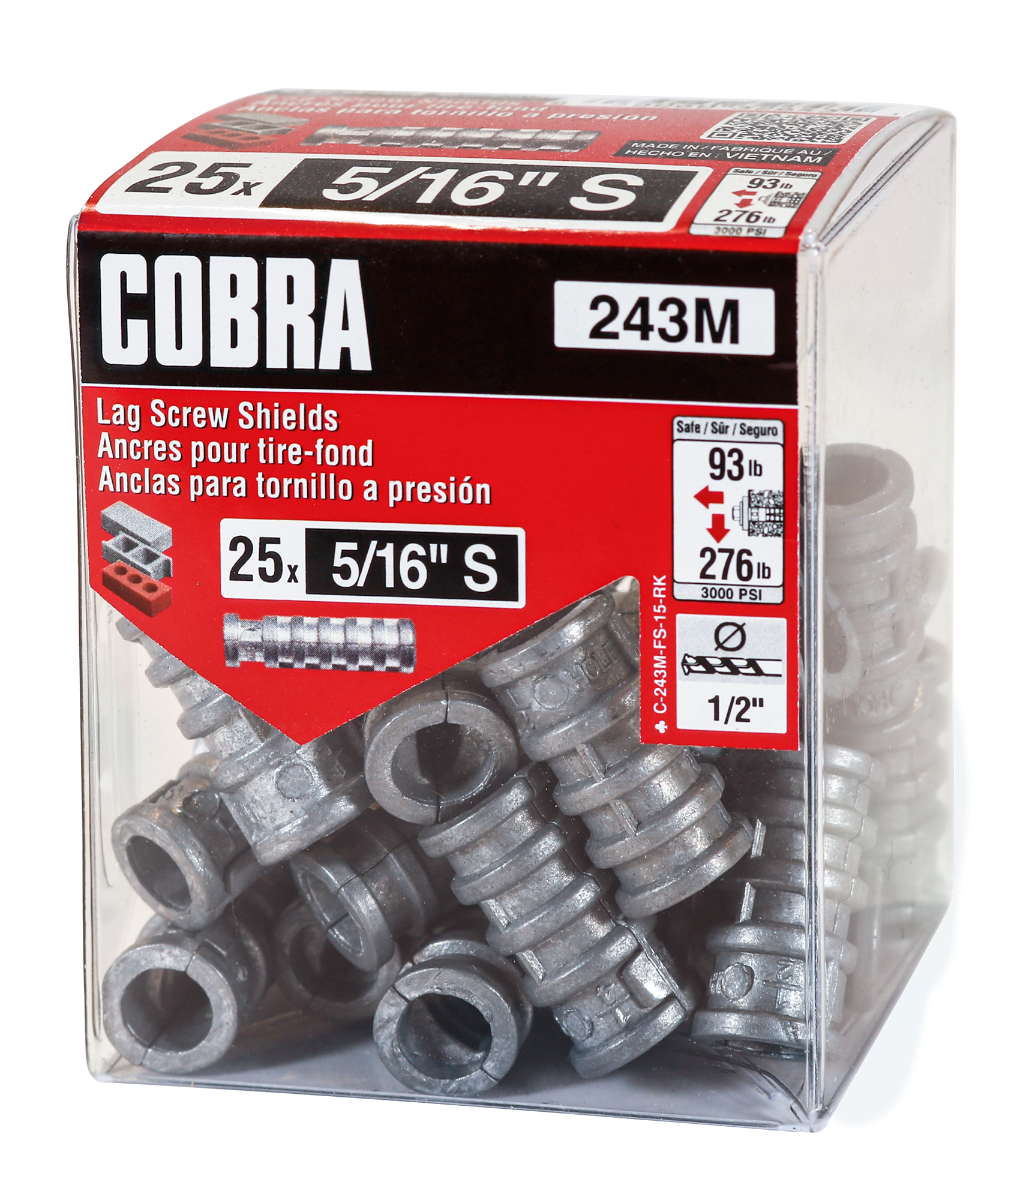 Cobra Lag Screw Shields 1/2 S Box of 10 